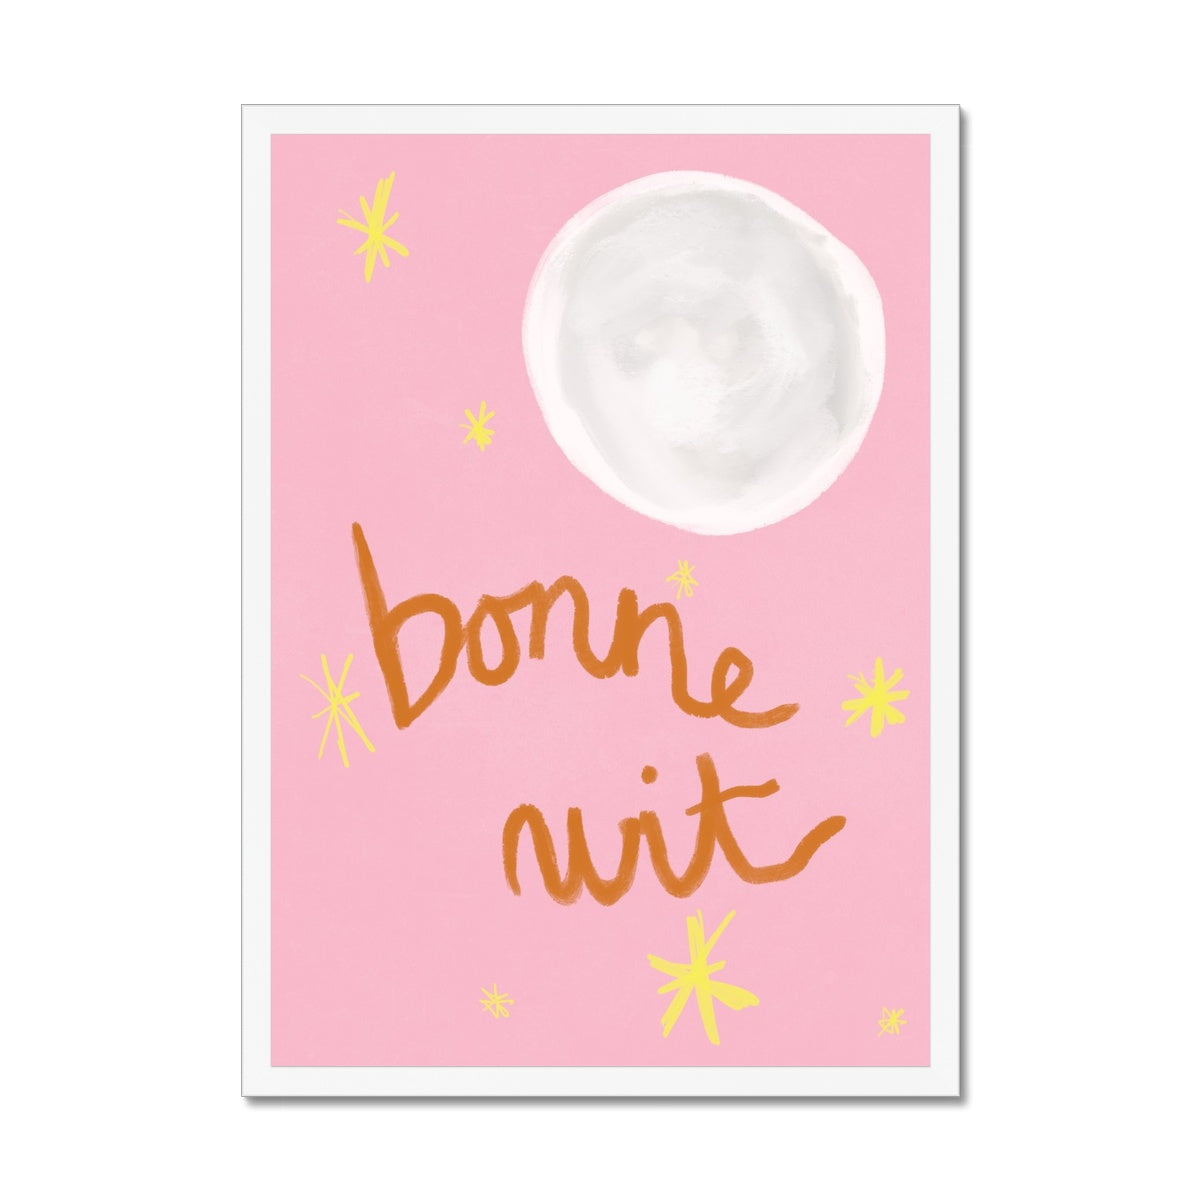 Bonne Nuit Print - Pink with Brown Framed Print